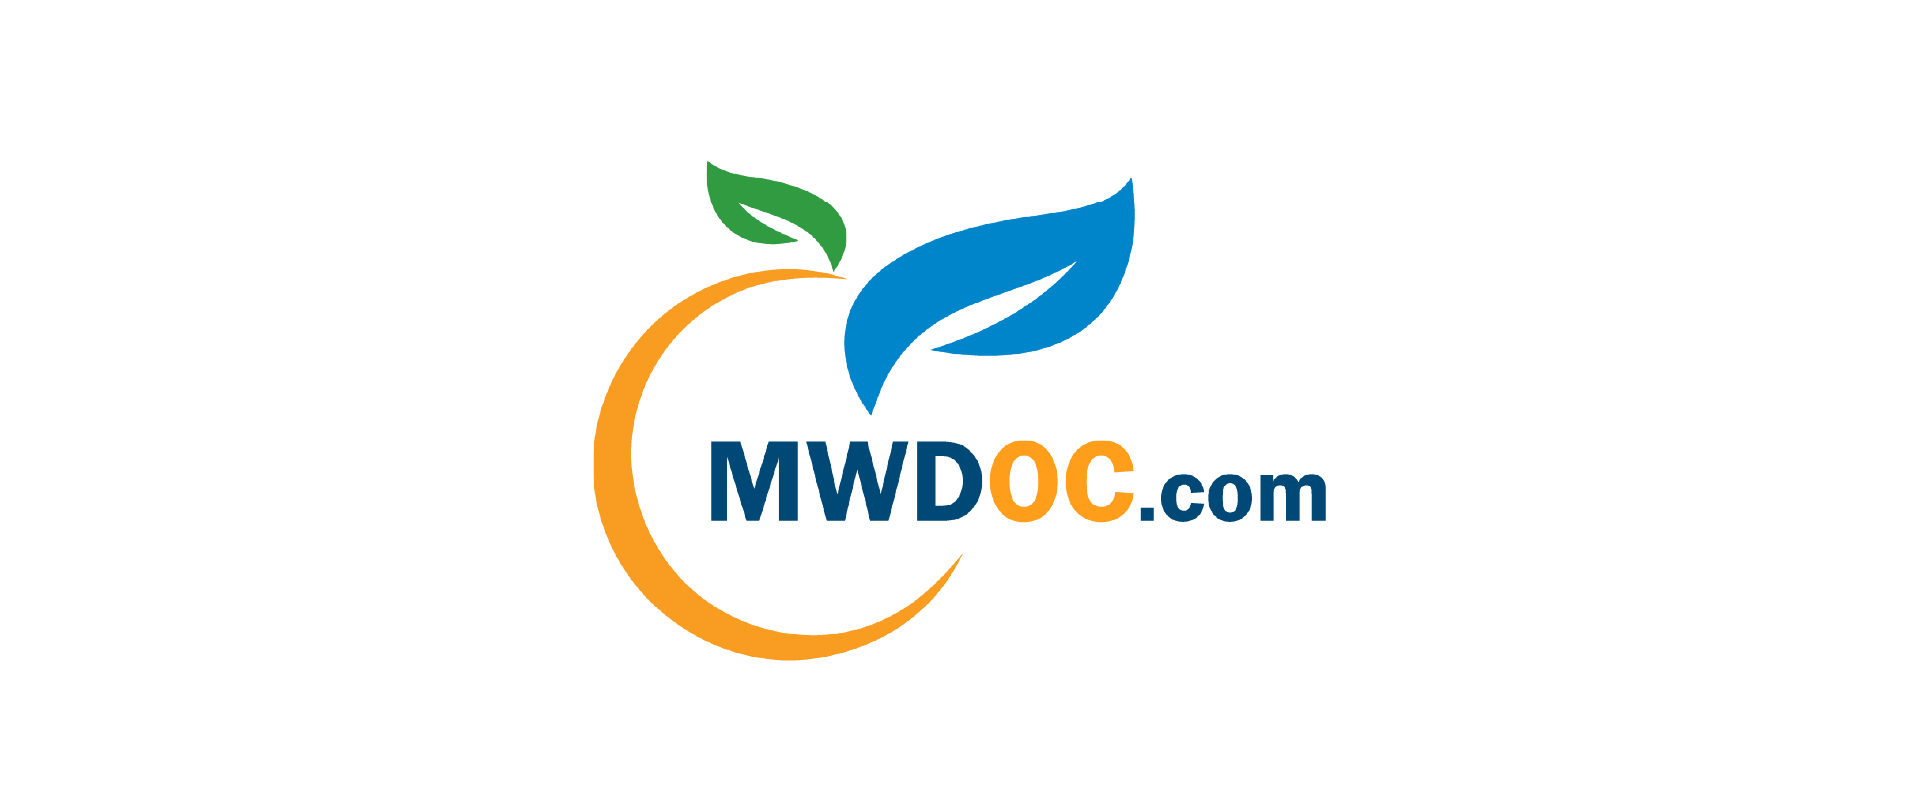 Municipal Water District of Orange County logo